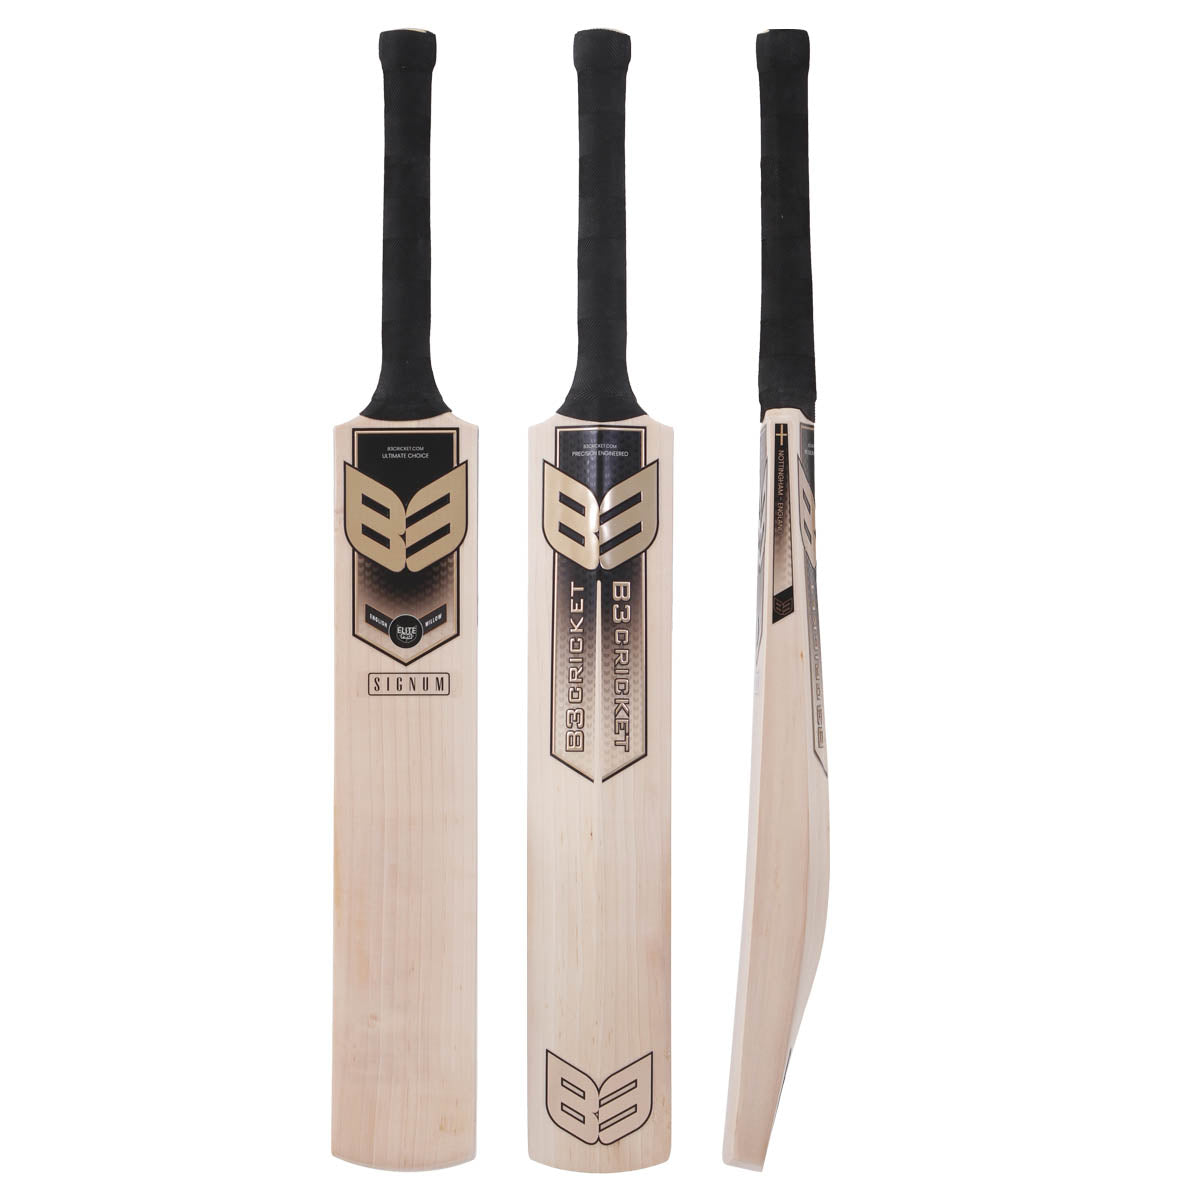 B3 Cricket Signum Elite Plus (Grade 1) Cricket Bat - The Cricket Store